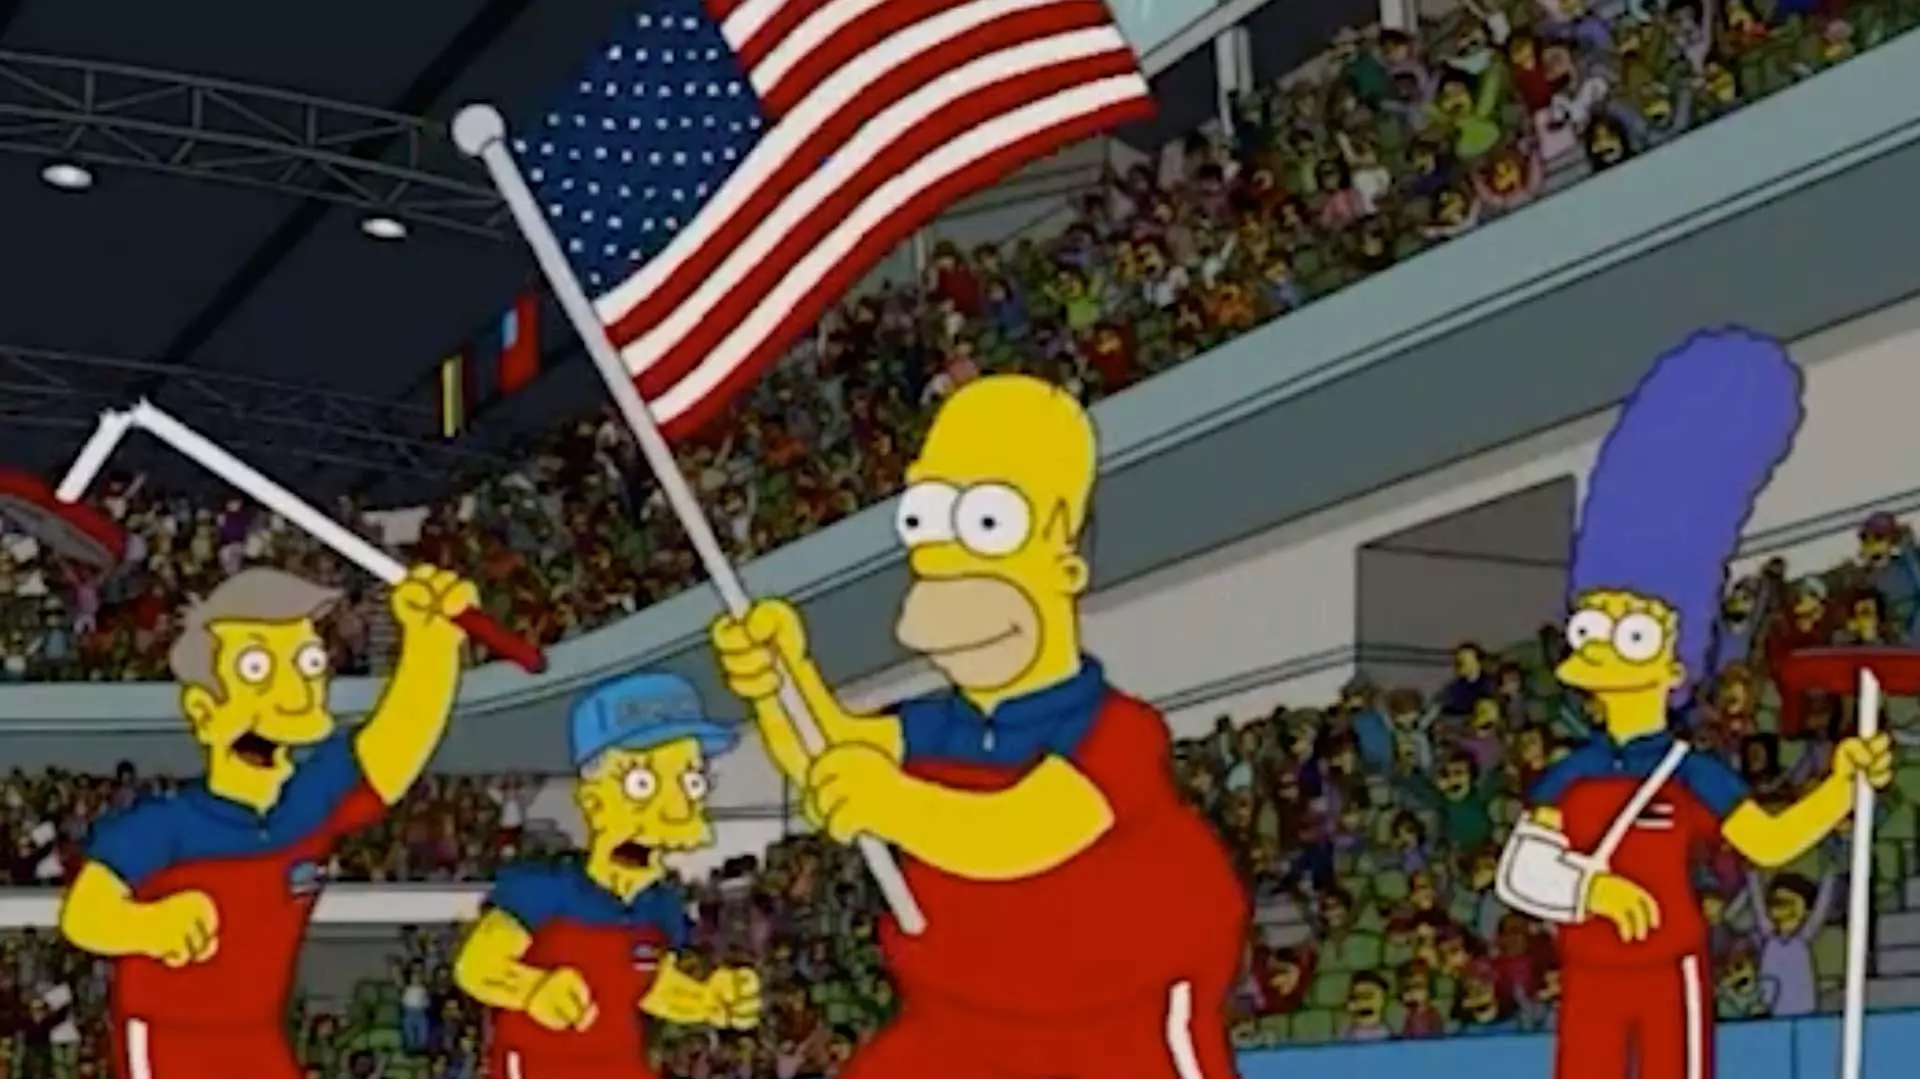 پیشگویی کسب مدال طلا المپیک رشته کرلینگ توسط آمریکا در سریال سیمپسون ها